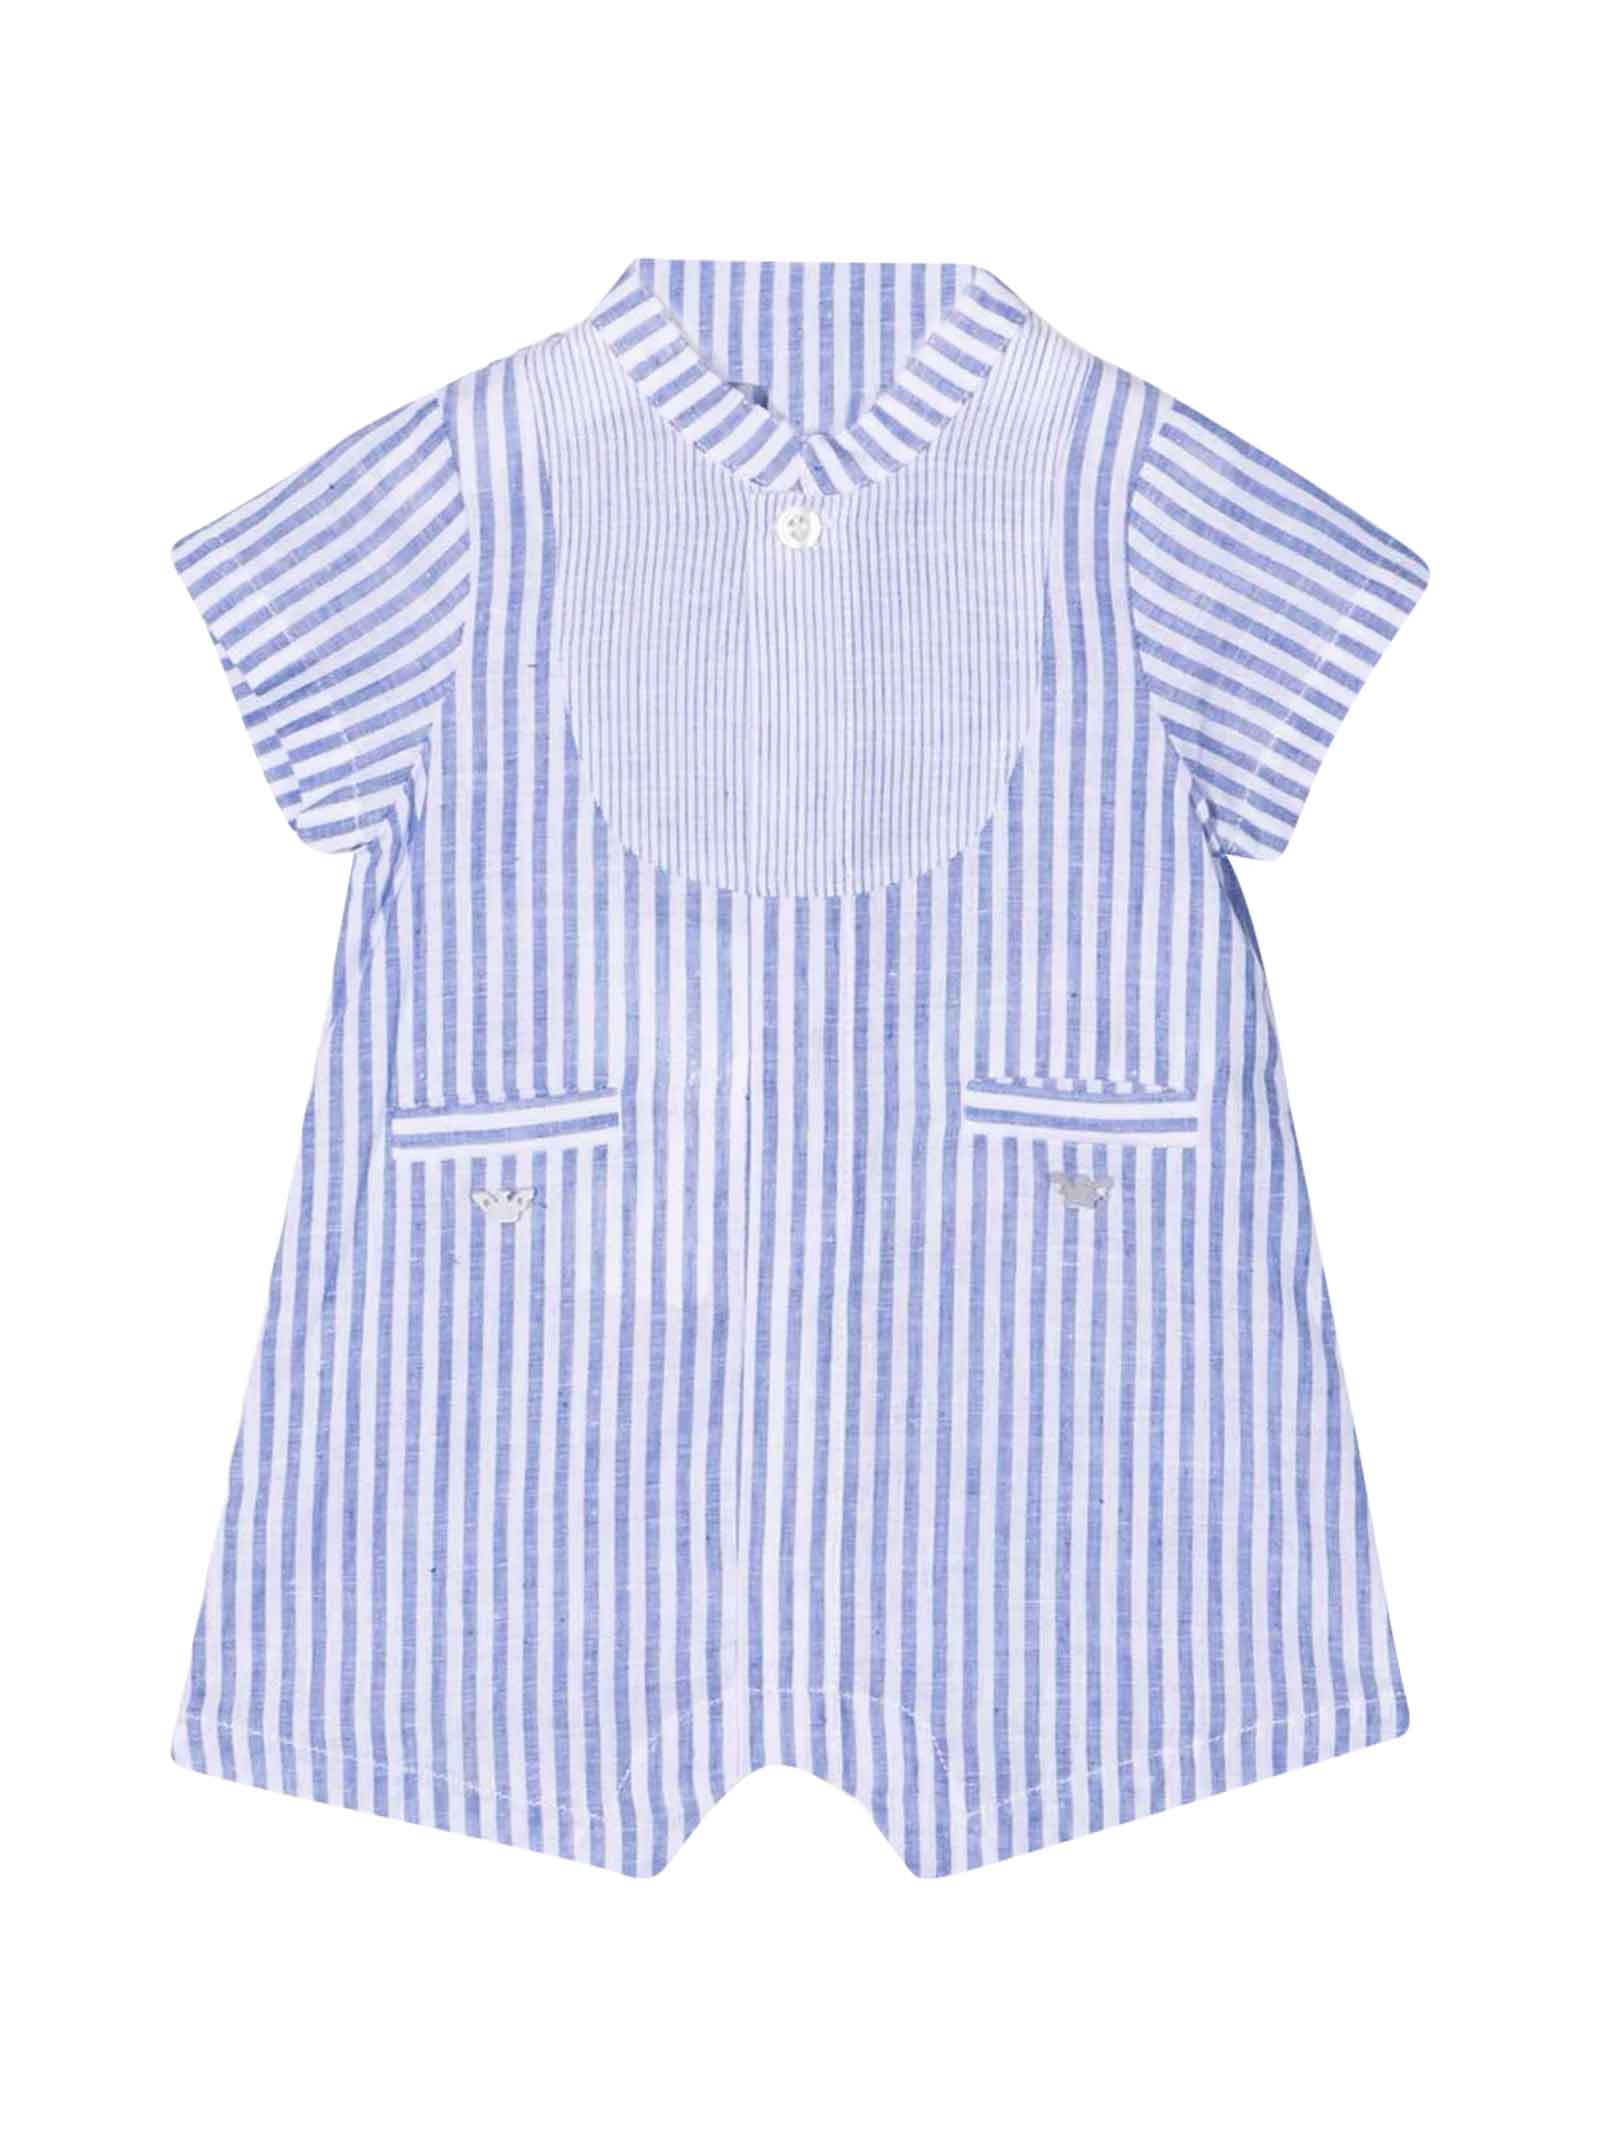 Emporio Armani Newborn Striped Babysuit